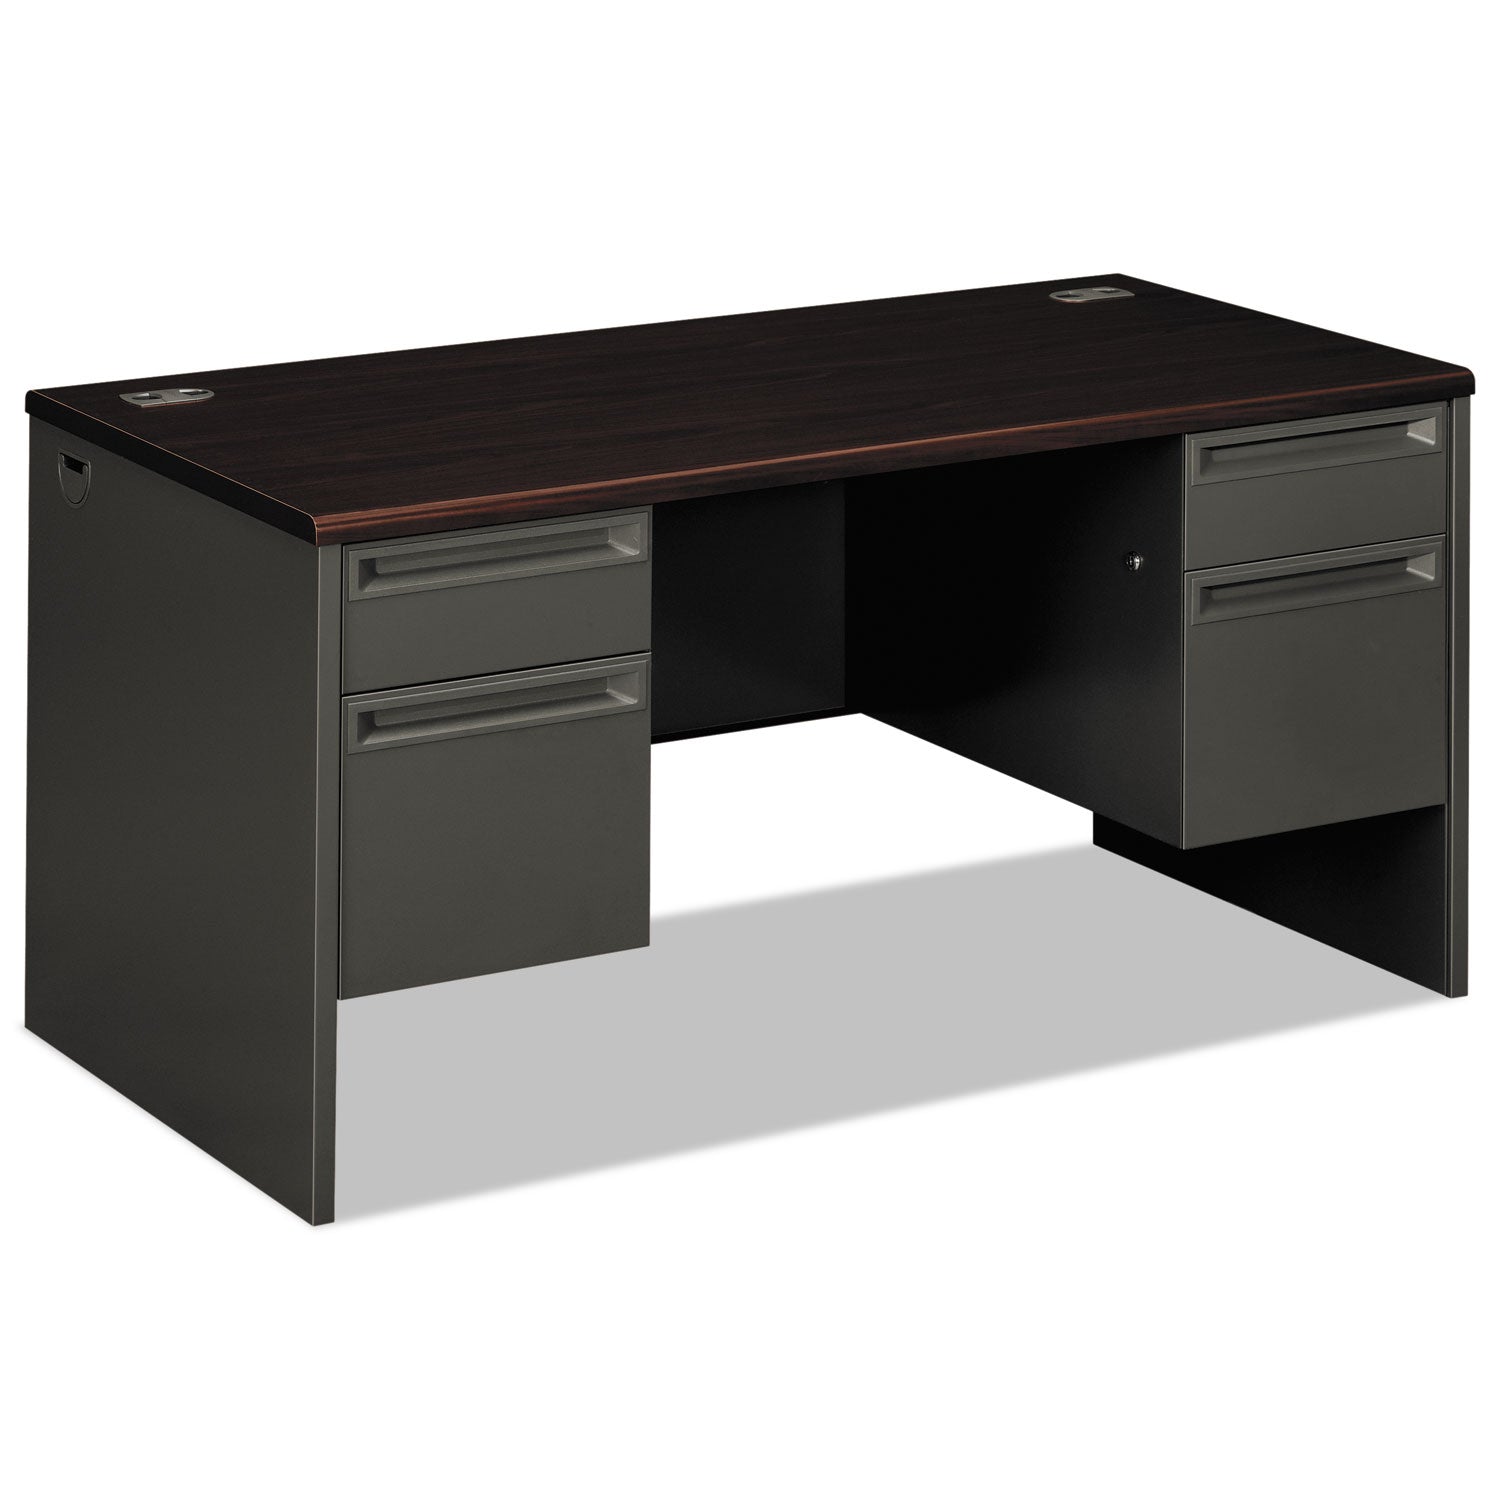 38000 Series Double Pedestal Desk, 60" x 30" x 29.5", Mahogany/Charcoal - 